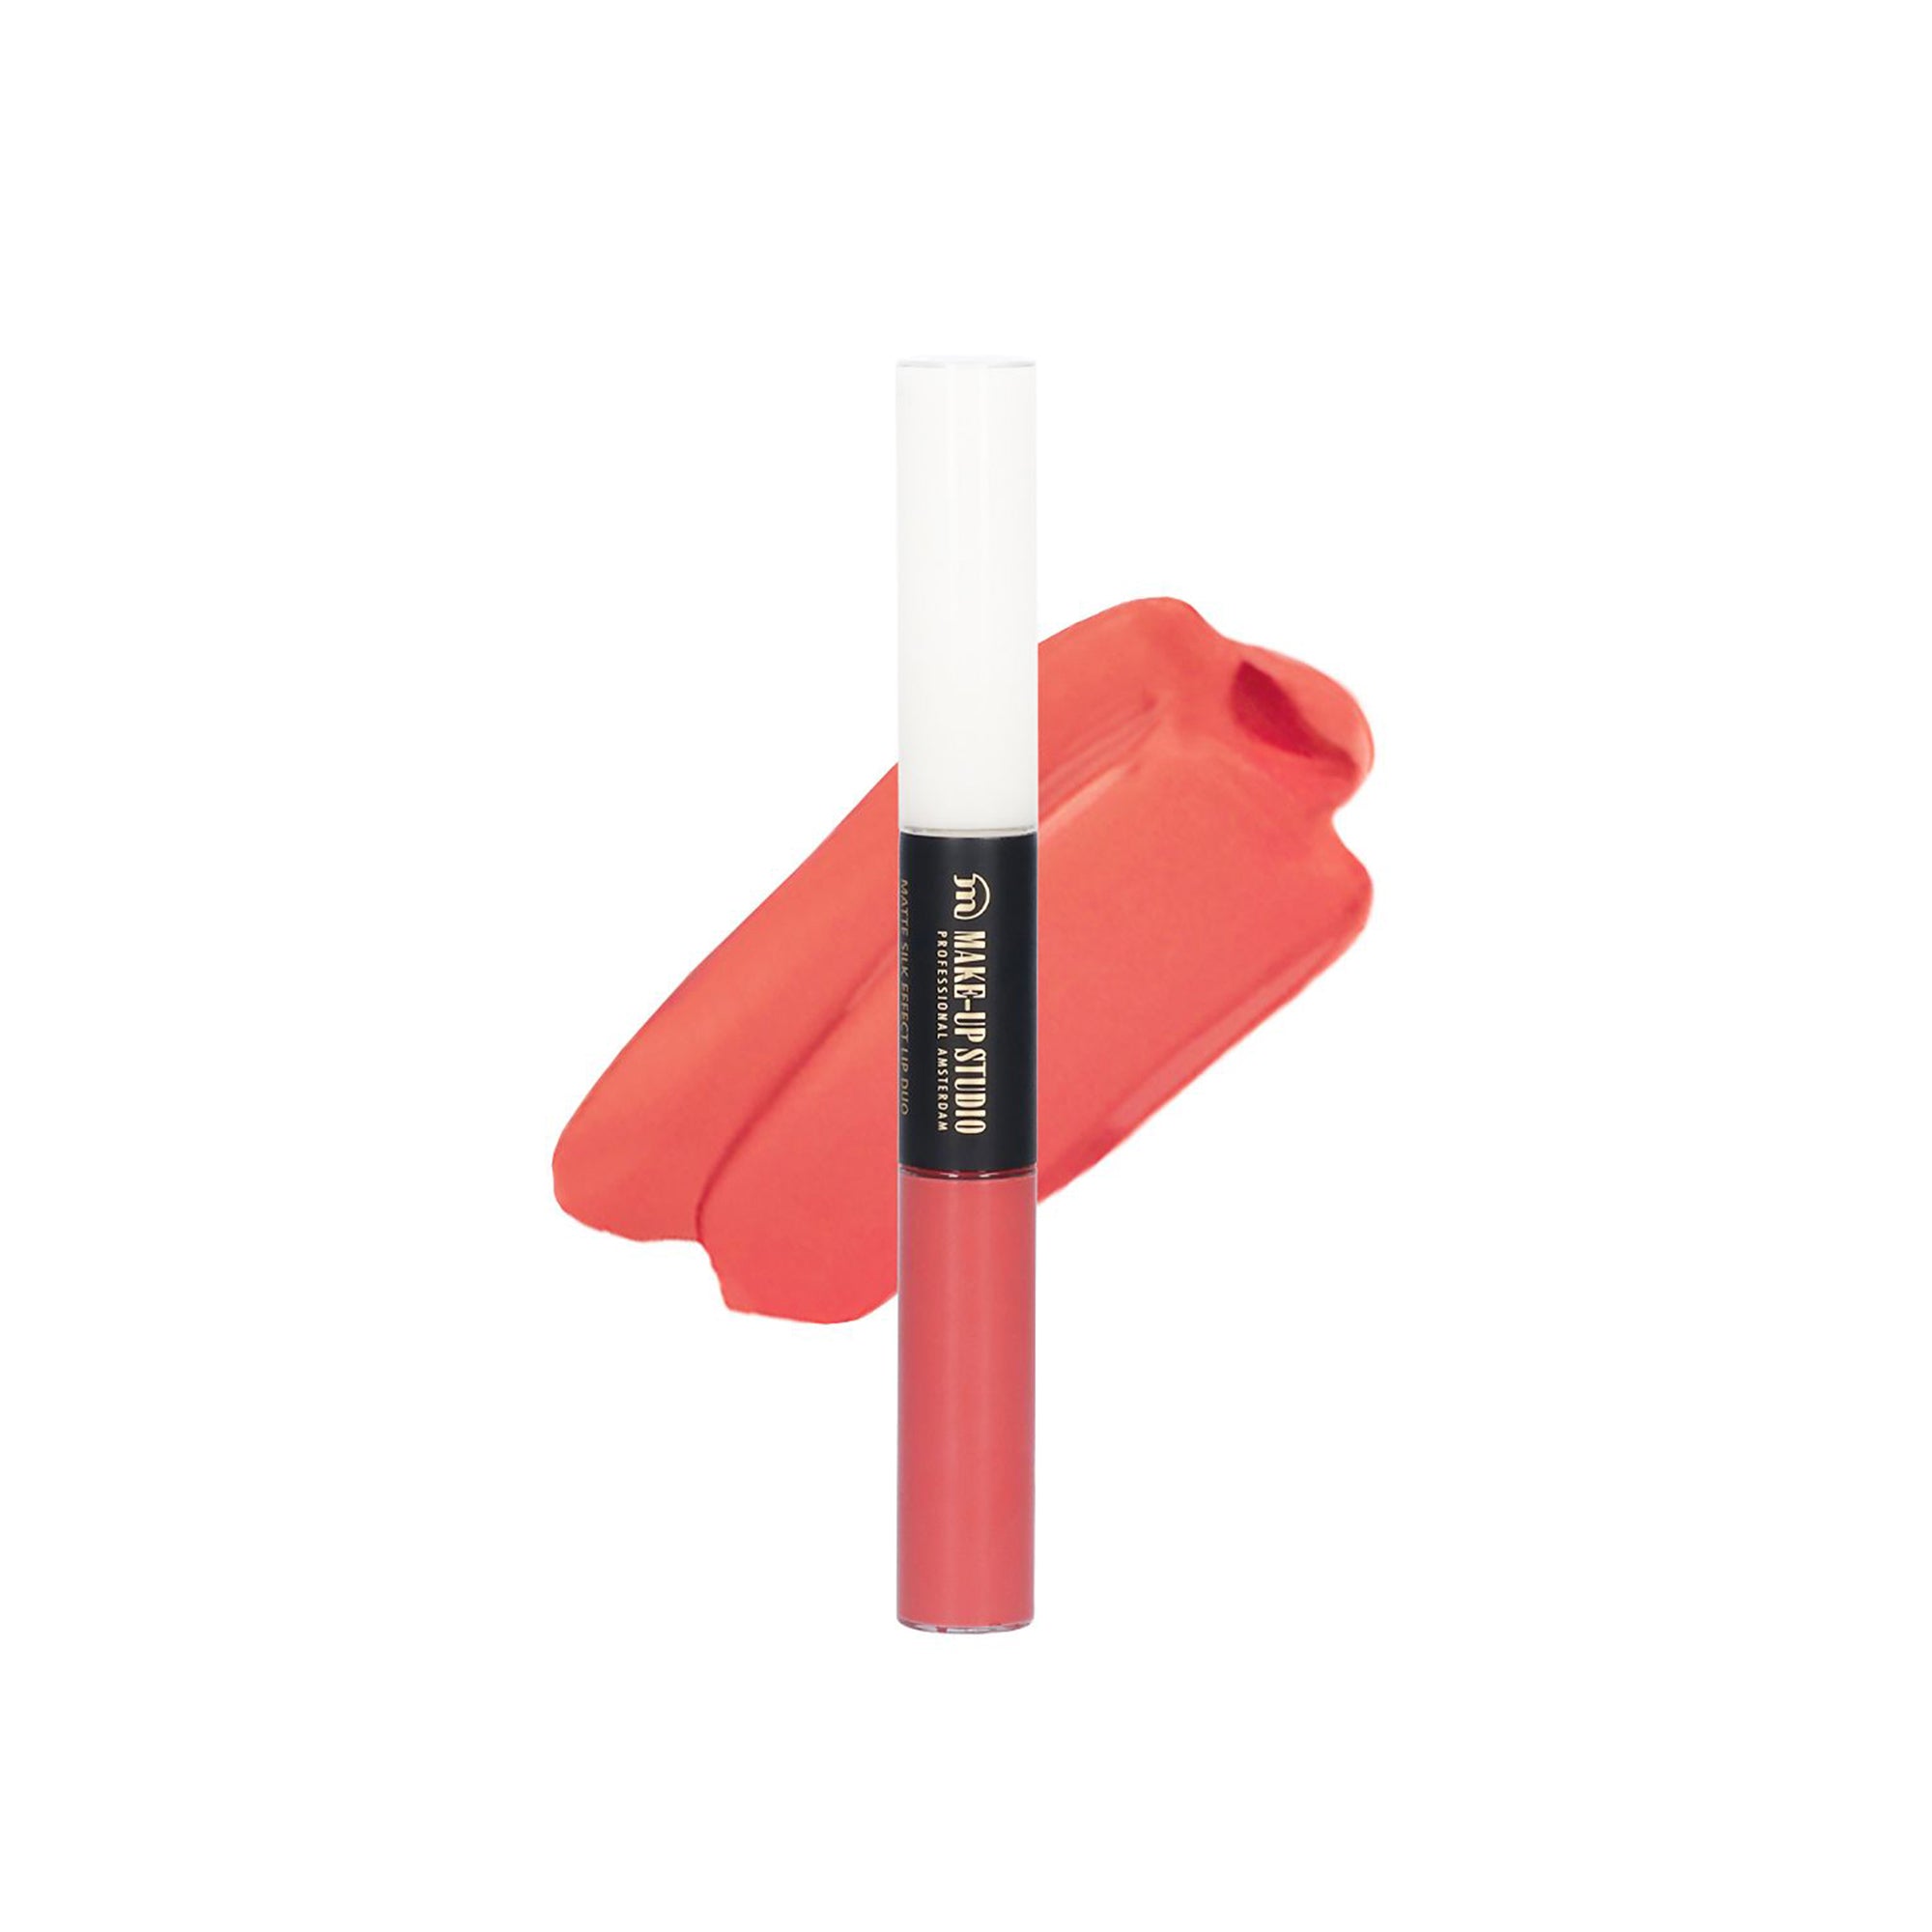 Make-Up Studio Amsterdam Matte Silk Effect Lip Duo Women Lipsticks Charming Coral 2pc